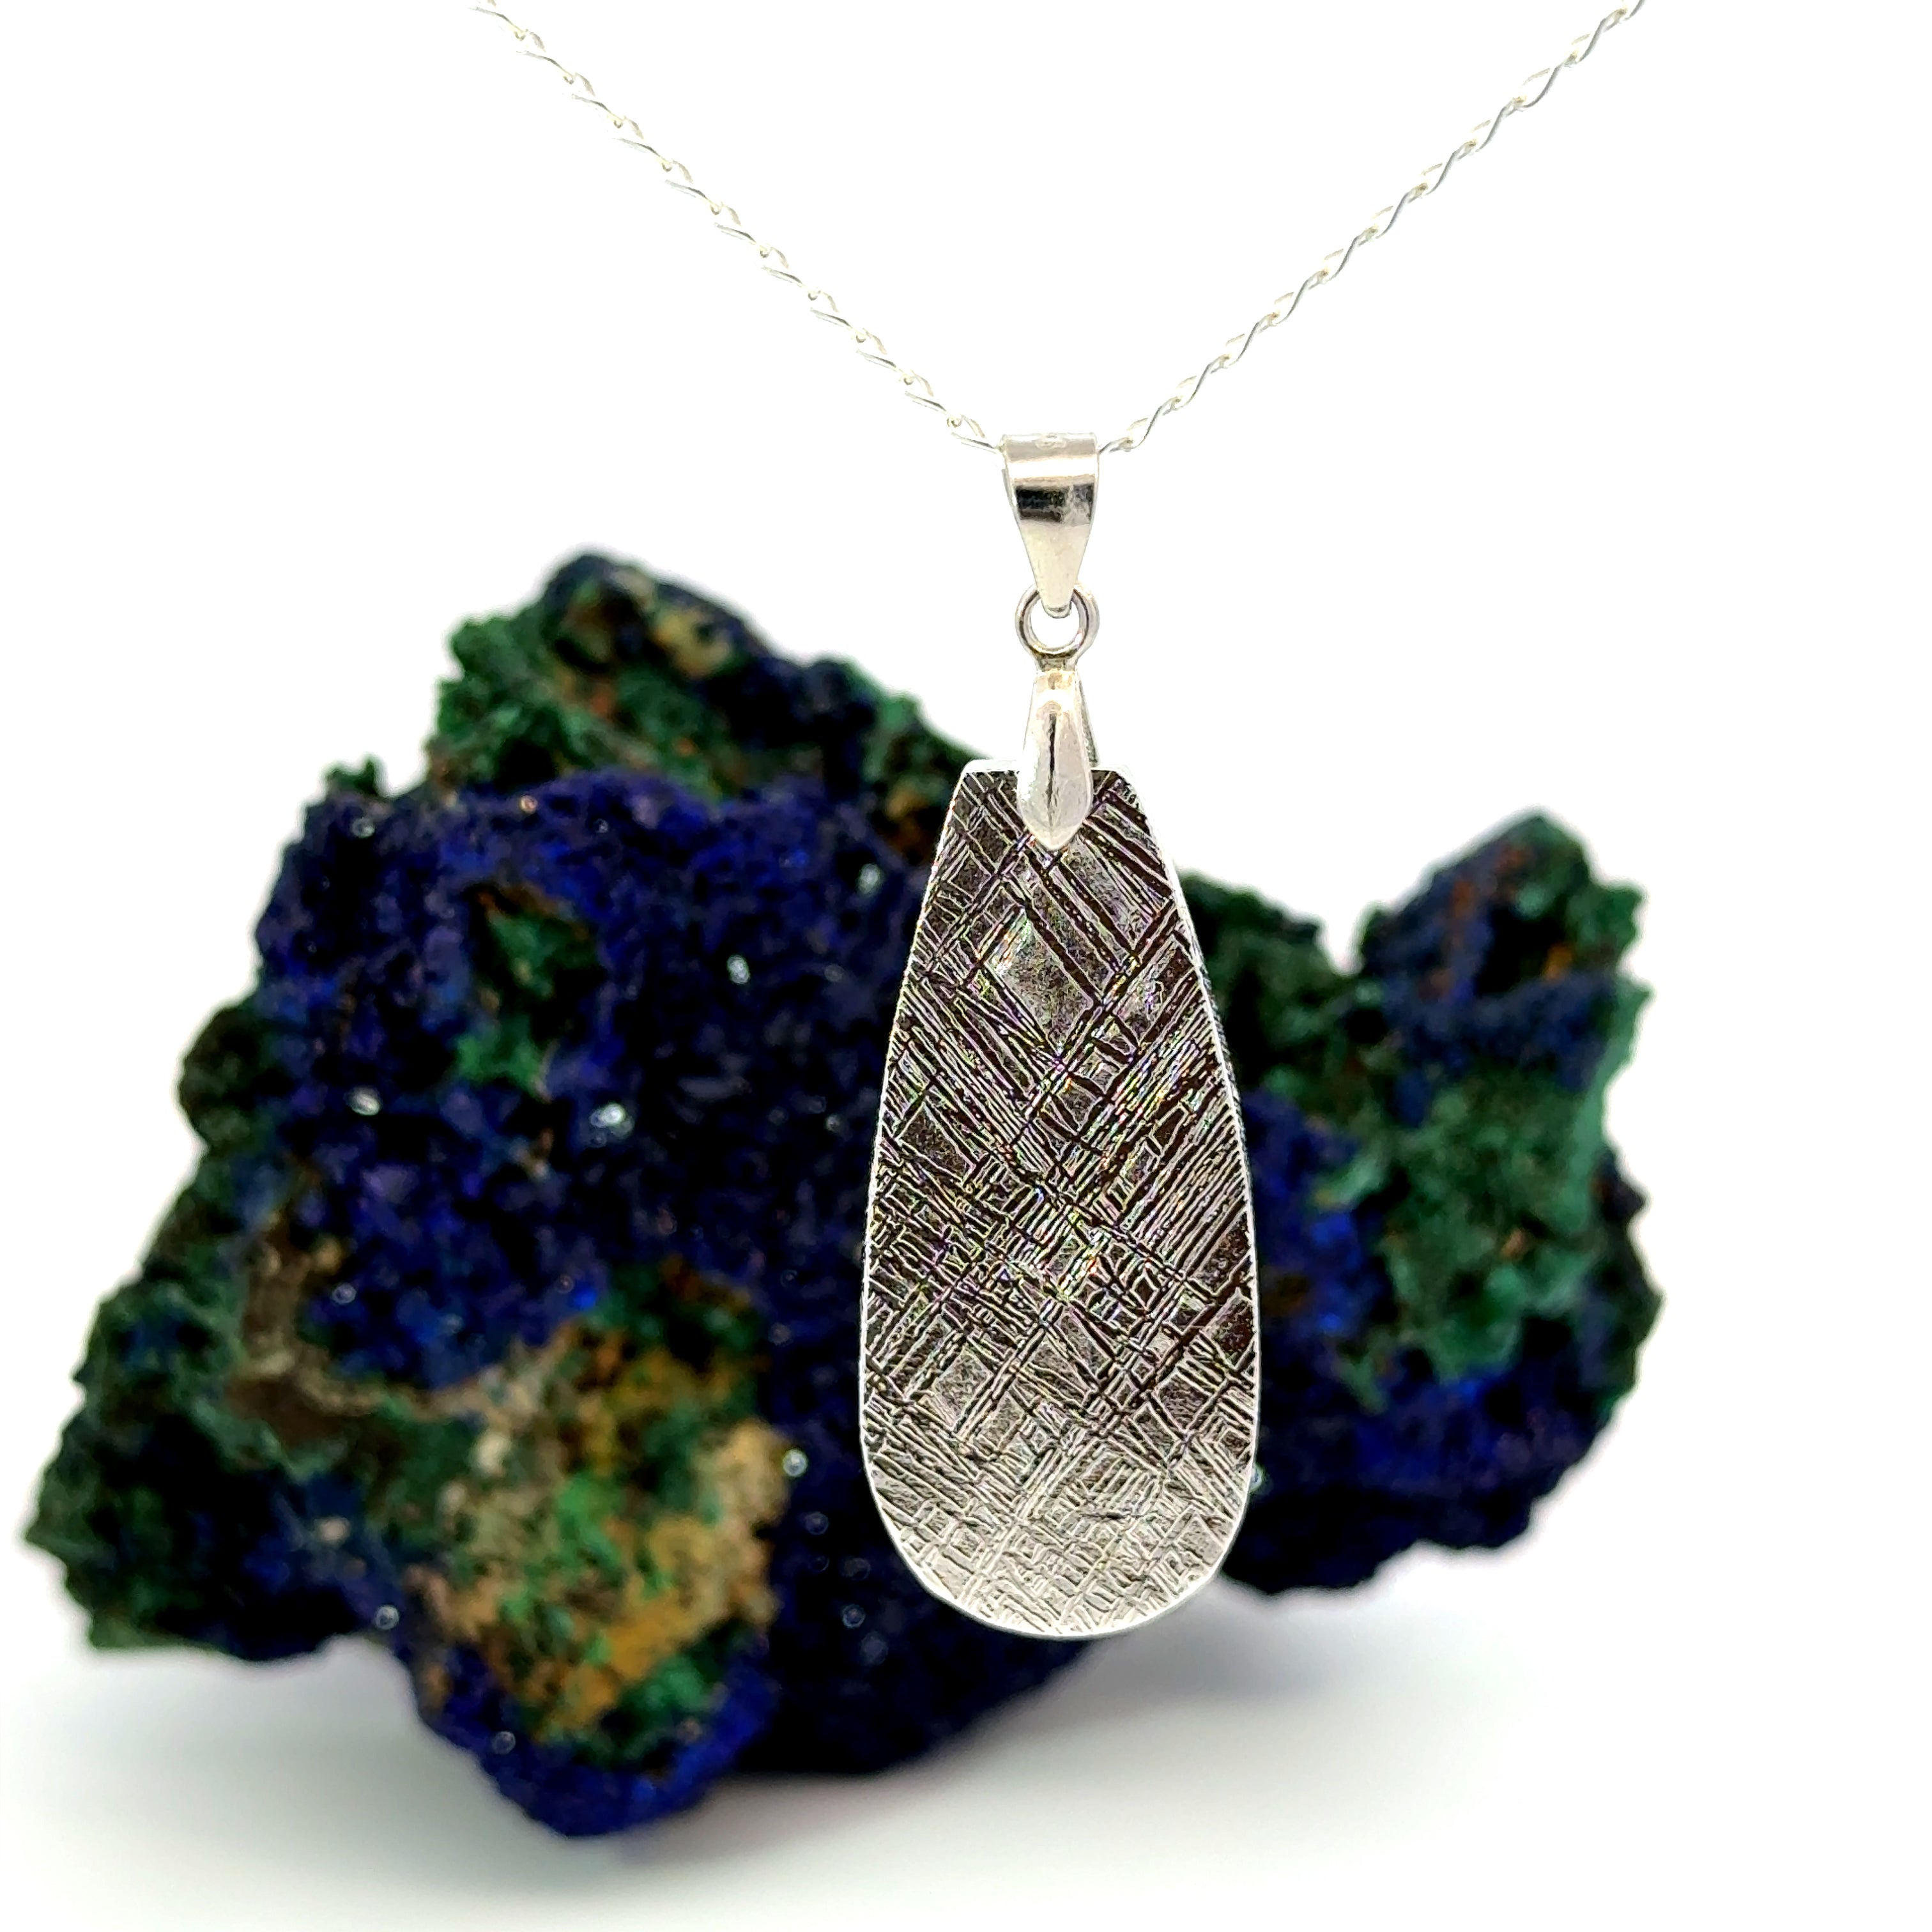 Pear Cut Muonionalusta Meteorite Necklace set in Sterling Silver